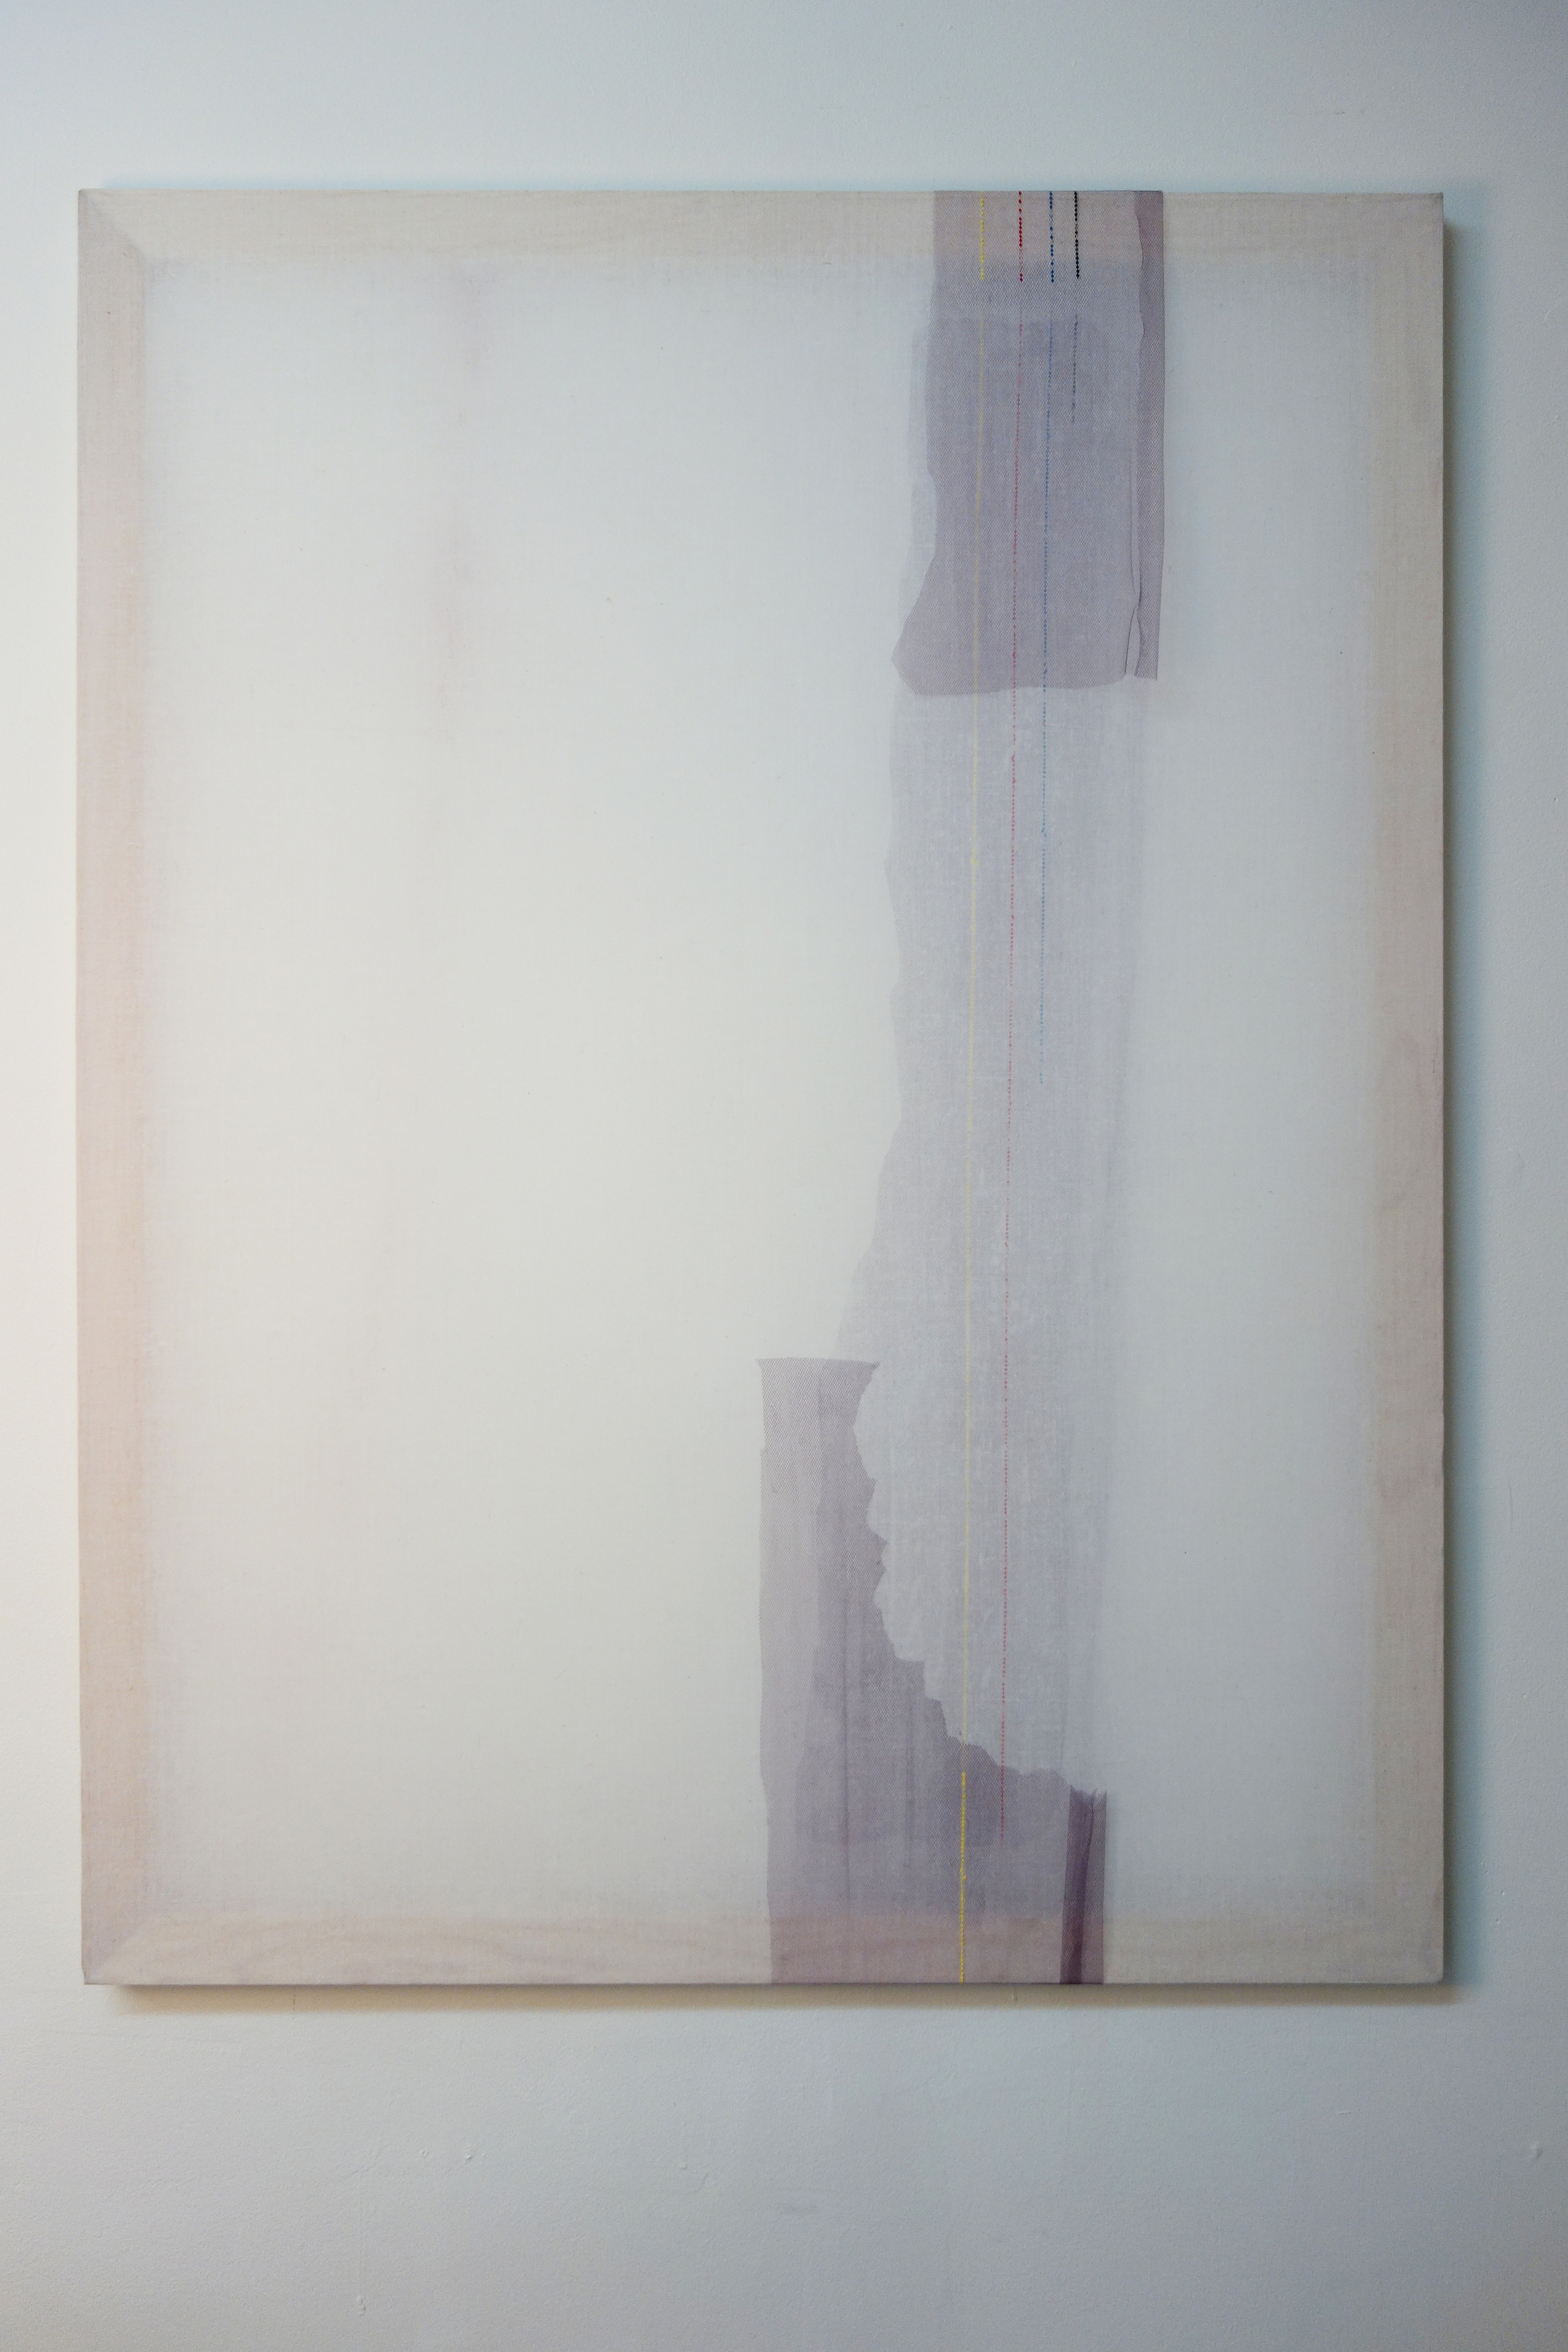 Mitzi Pederson, Untitled, 2013, 31″ x 41″, tulee, acrylic on muslin. Image courtesy of the Et al.